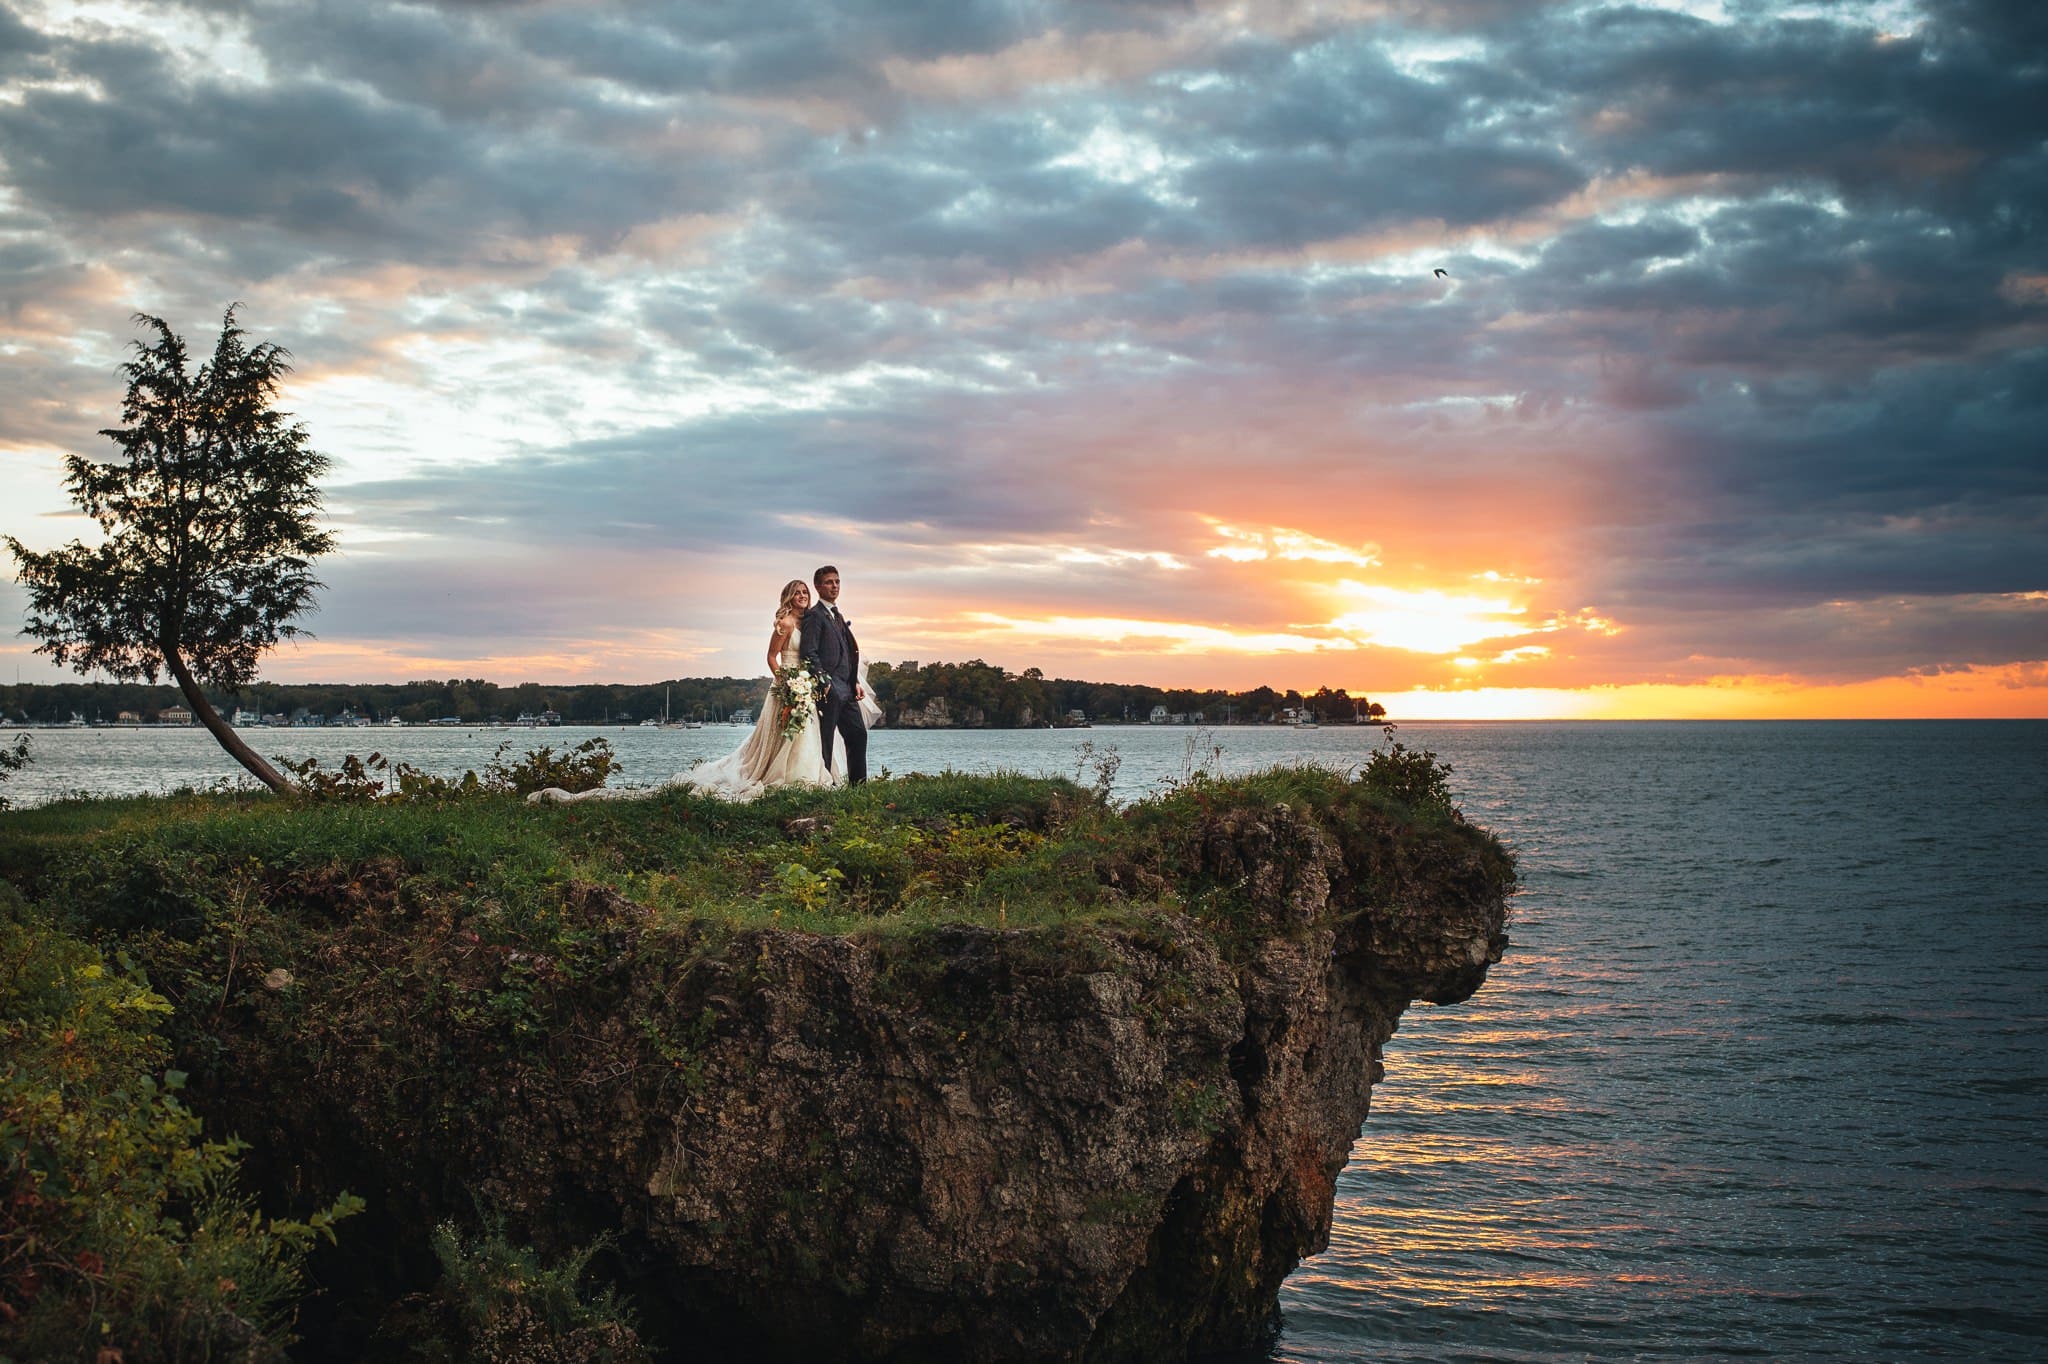 Put-in-Bay sunset wedding photo